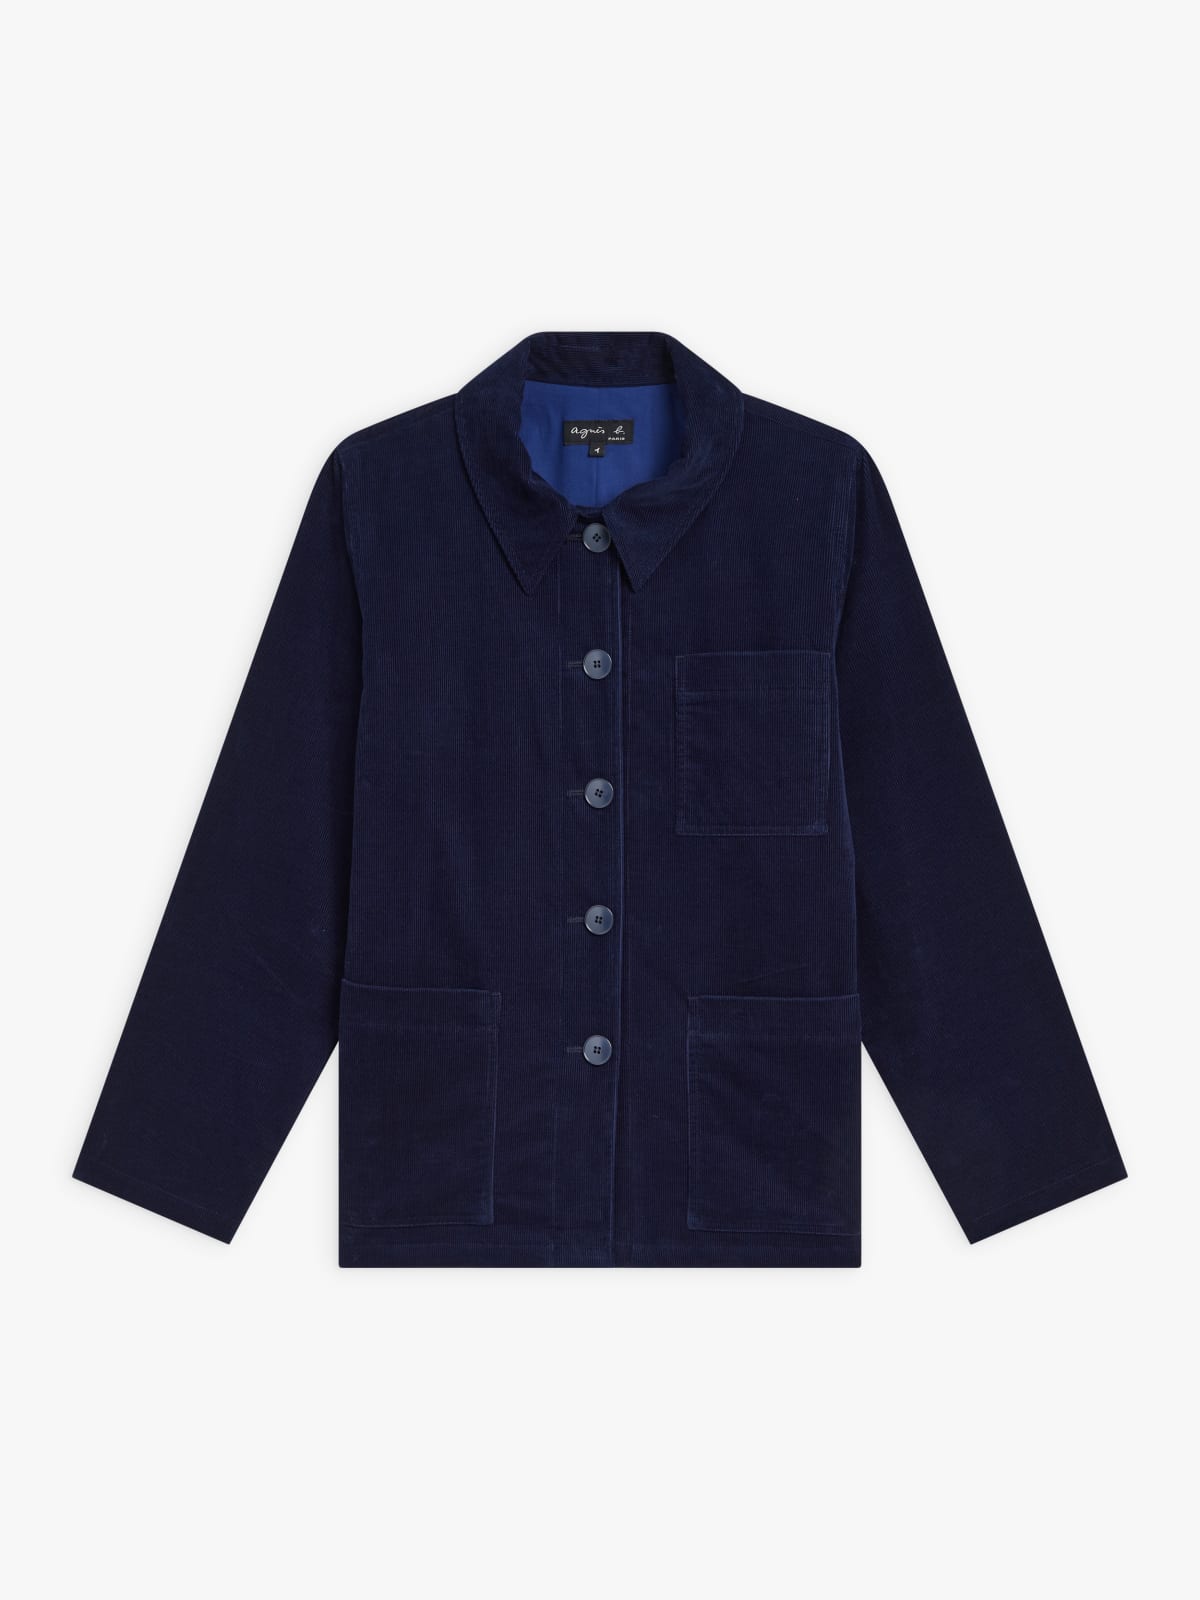 navy blue corduroy Ming jacket